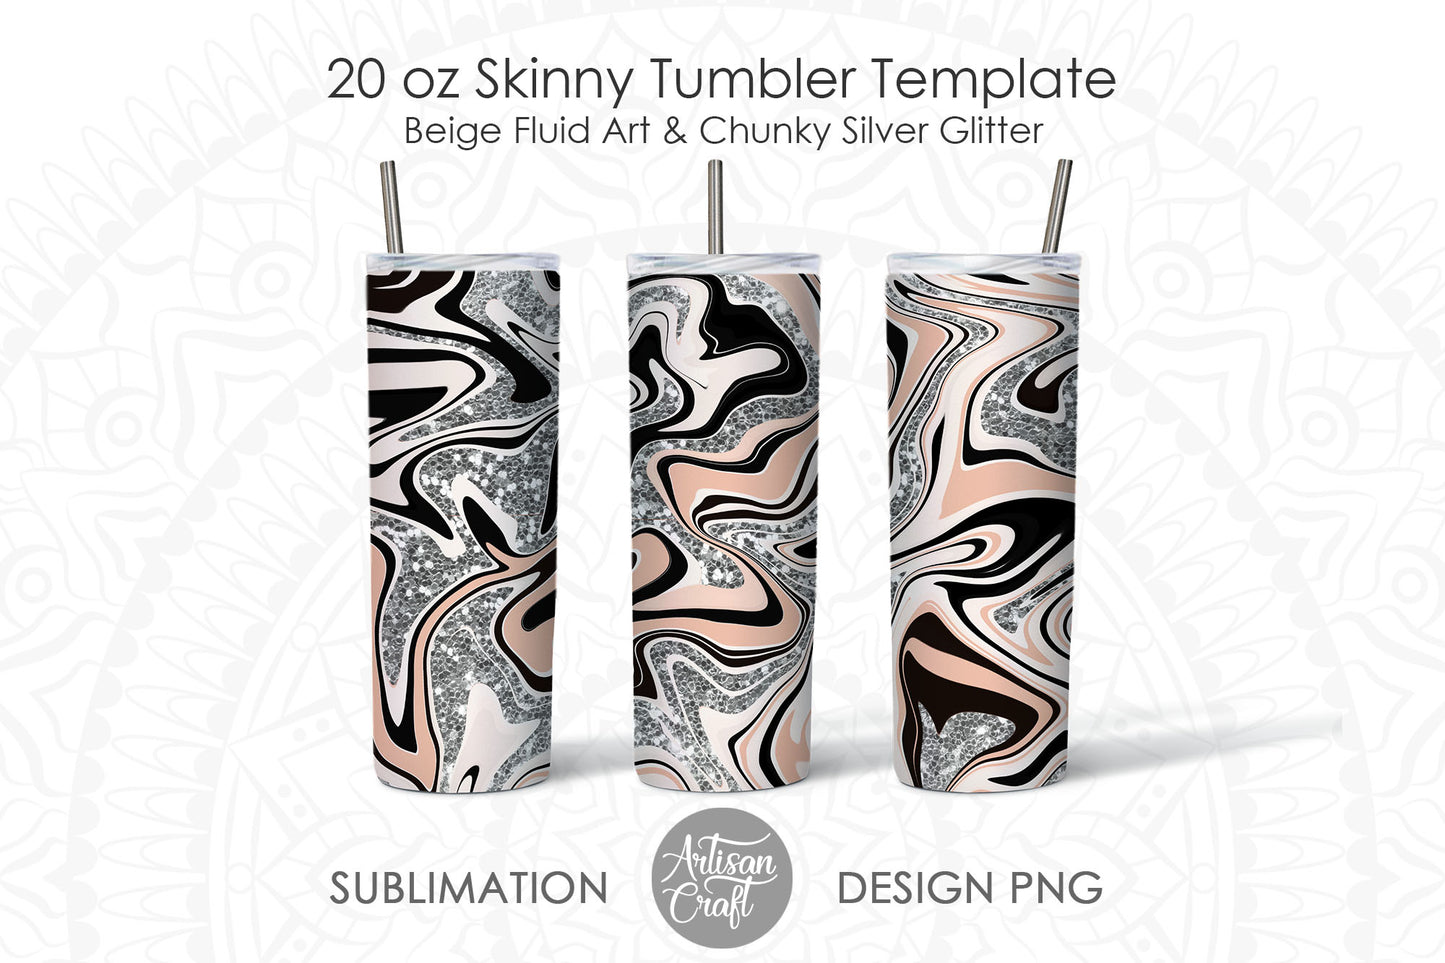 Tumbler sublimation in beige fluid art